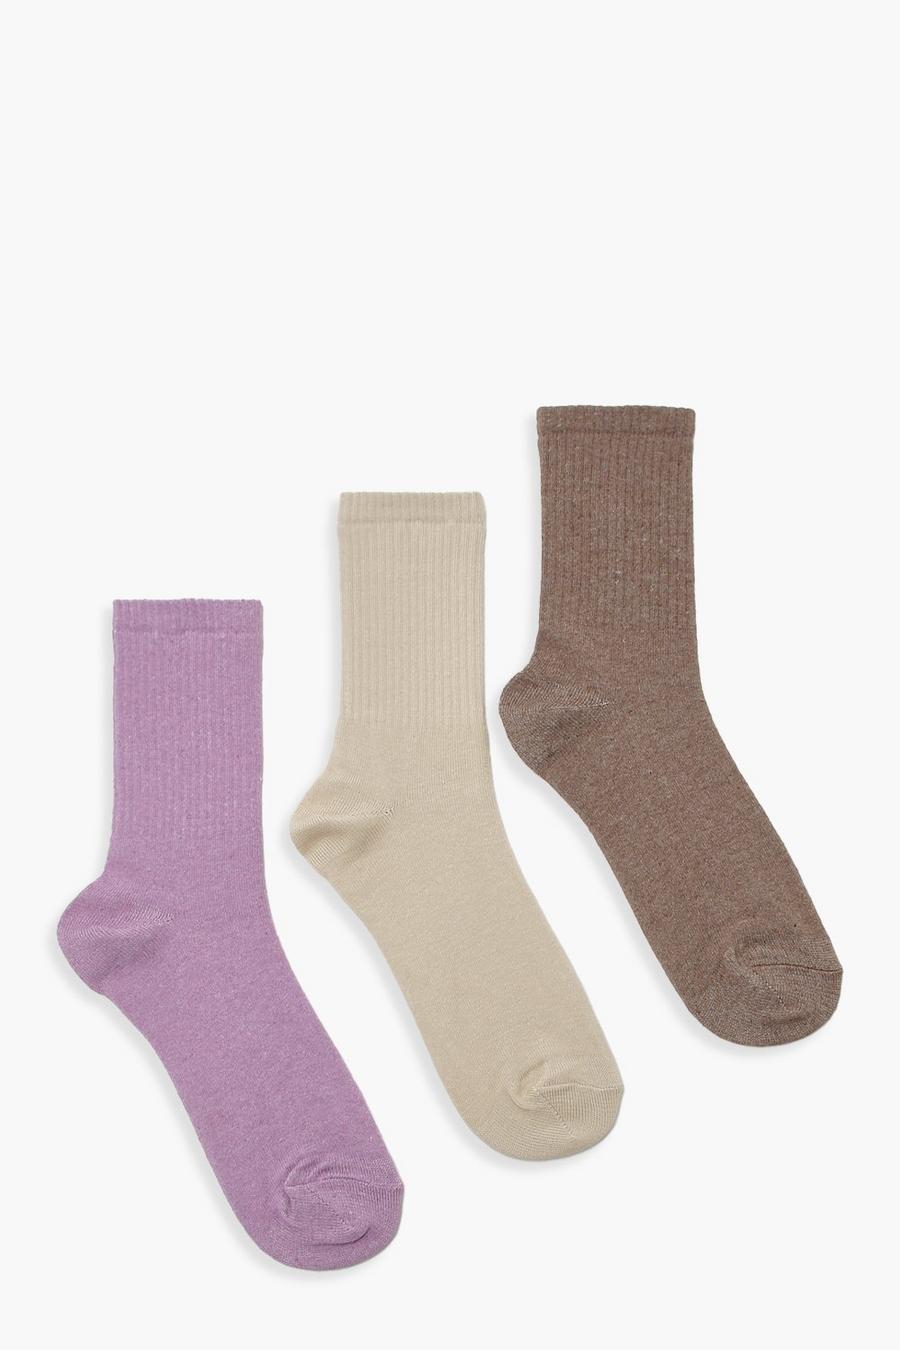 Multi Neutral Tonal Socks 3 Pack